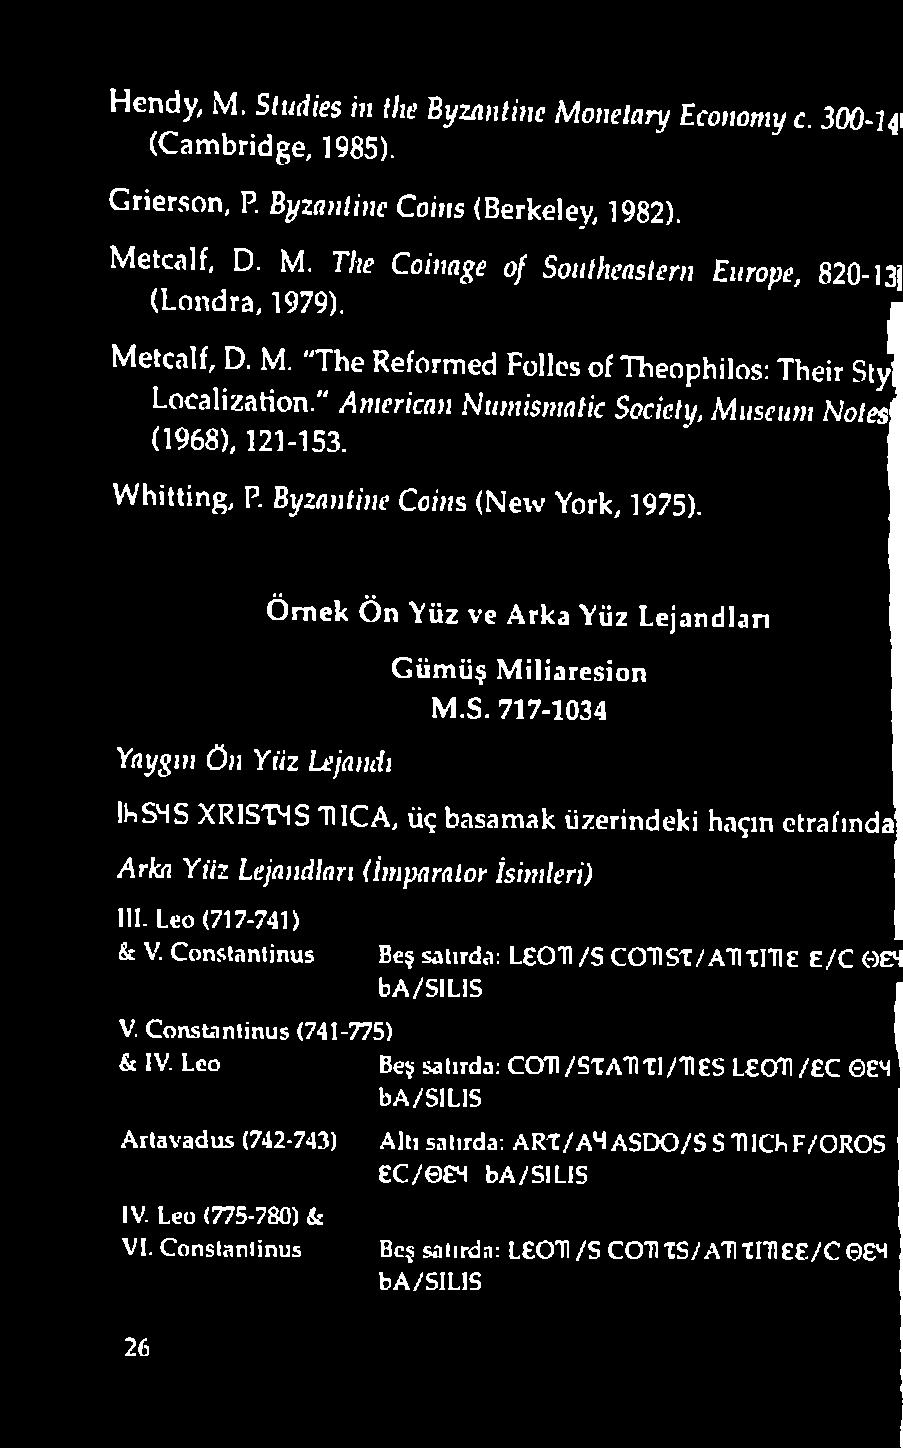 Constantinus Beş satırda: L OT /S COT1ST/ATİ im /C a ba/silis V. Constantinus (741-775) & IV.